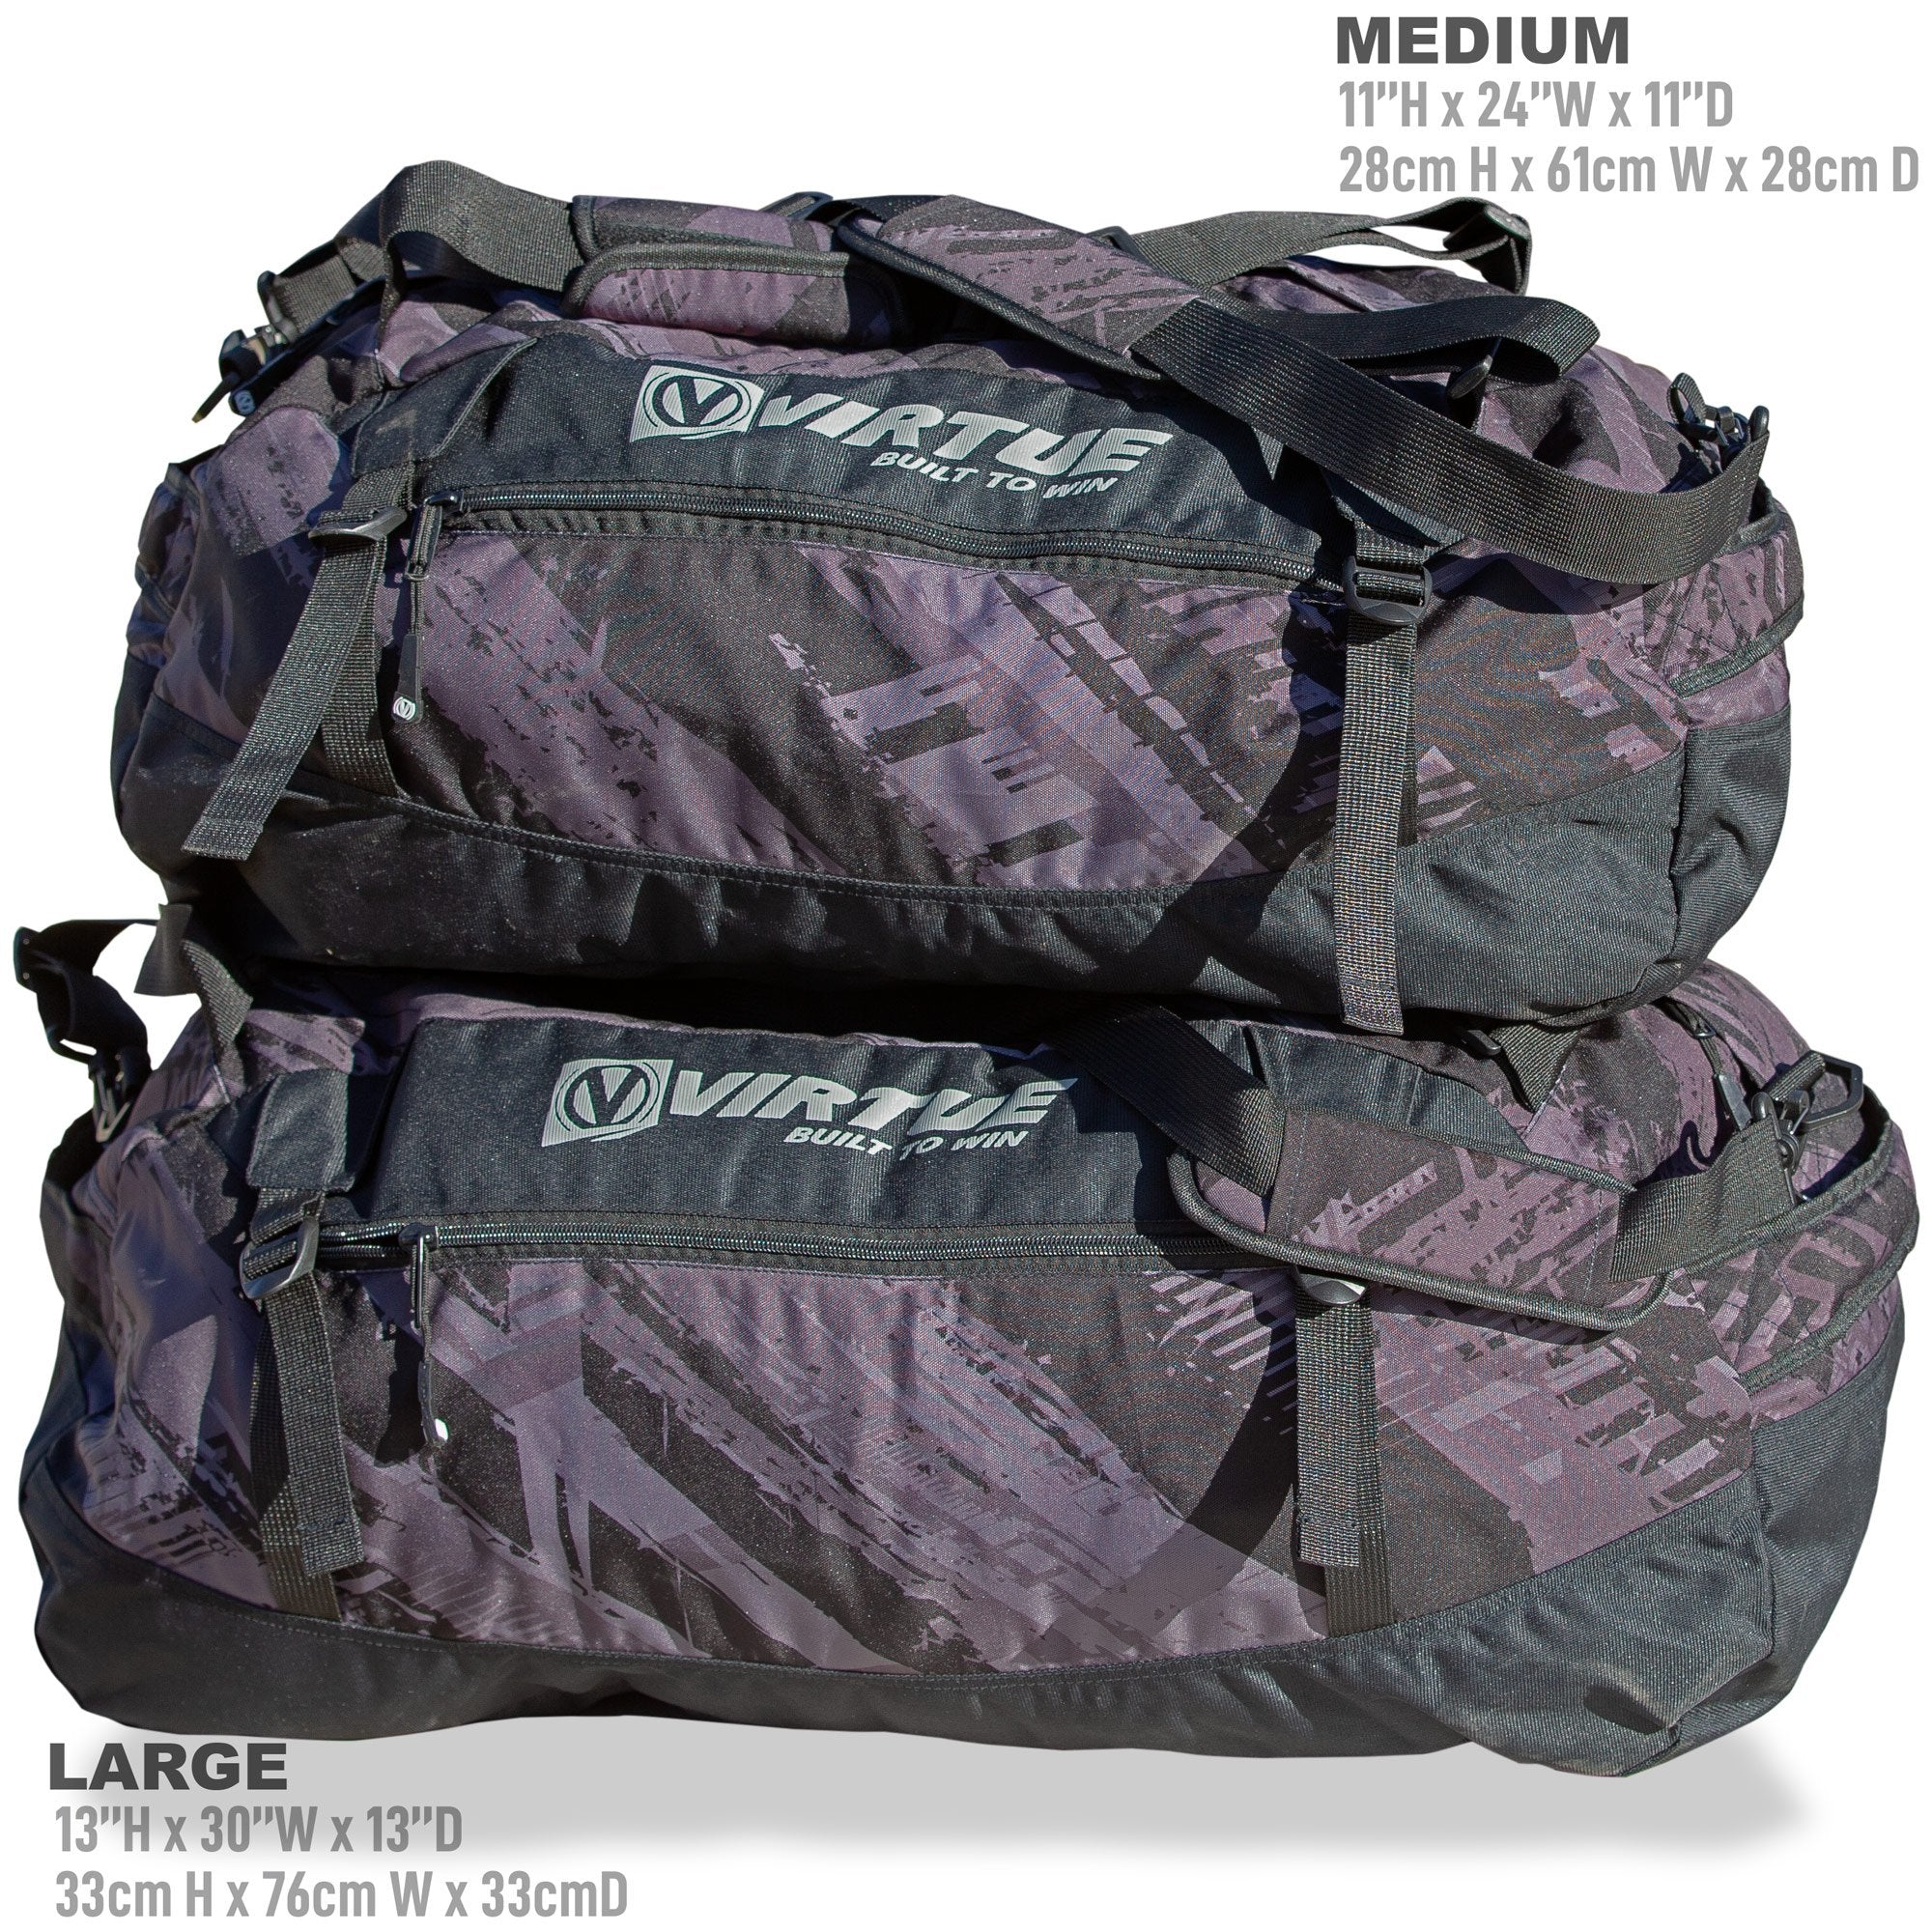 Virtue Proformance Duffel Bag - Large